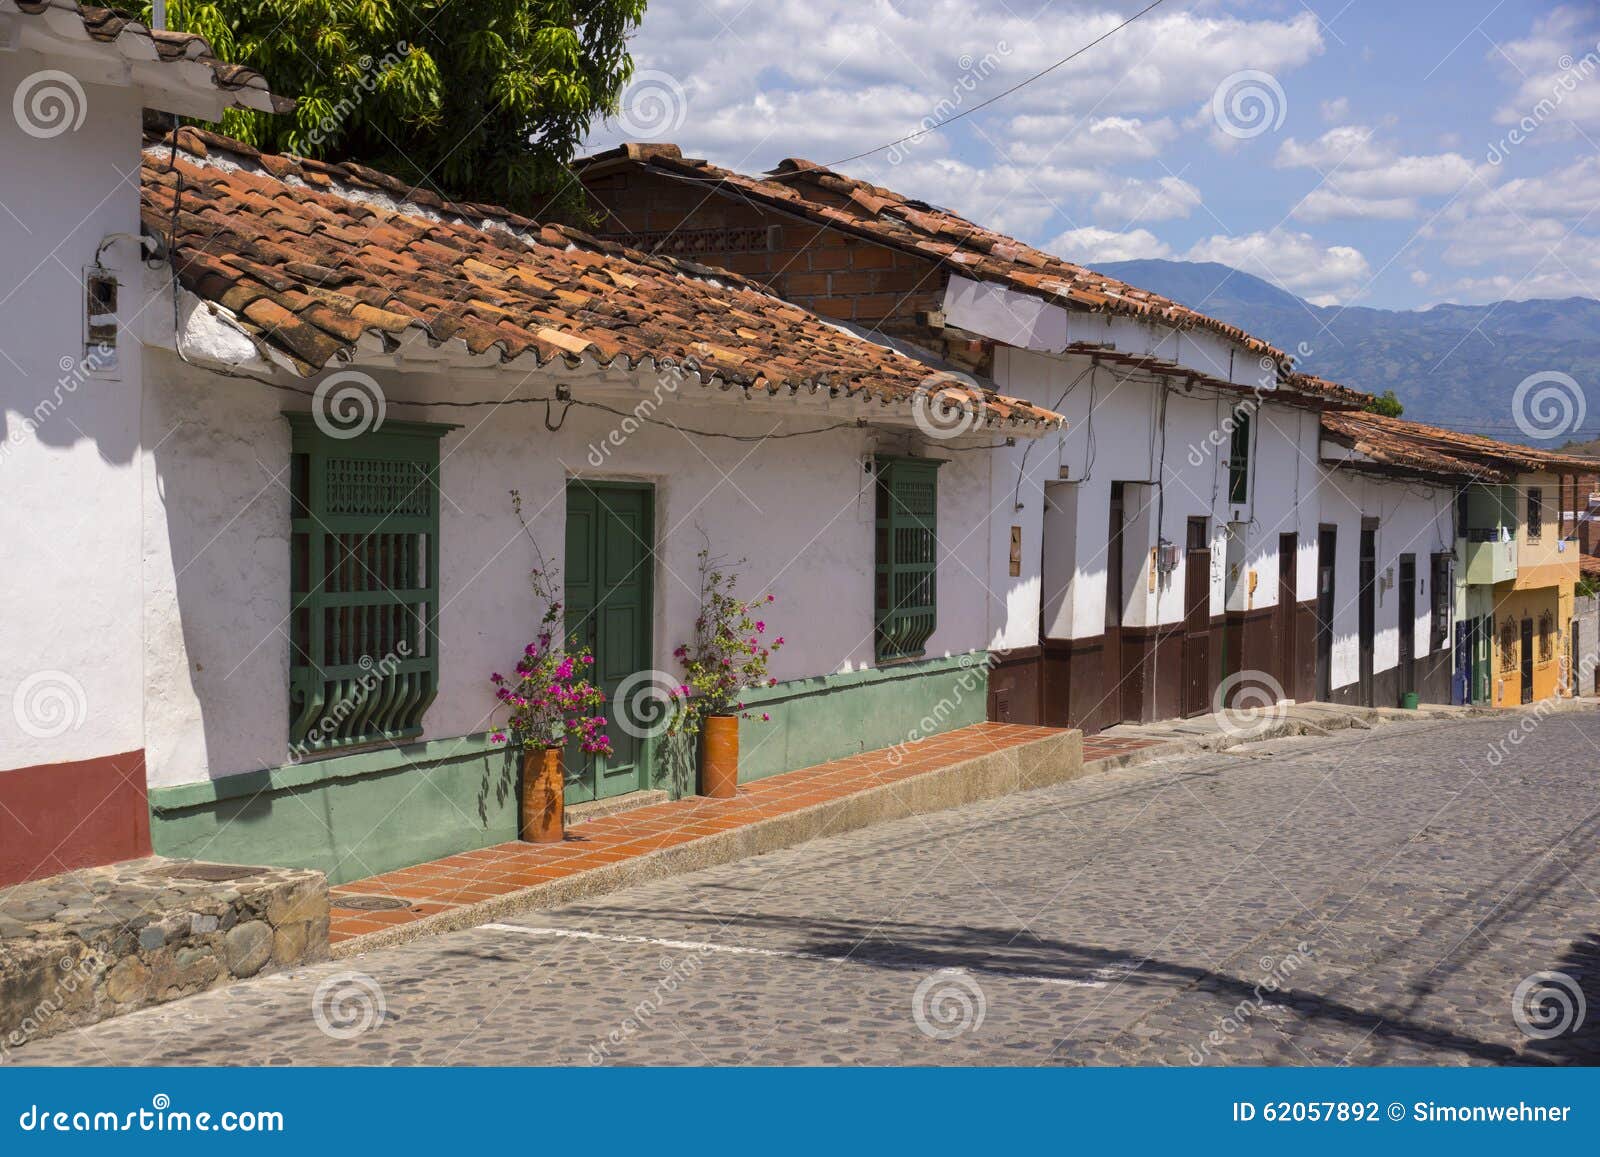 colombia - santa fe de antioquia - city, street view